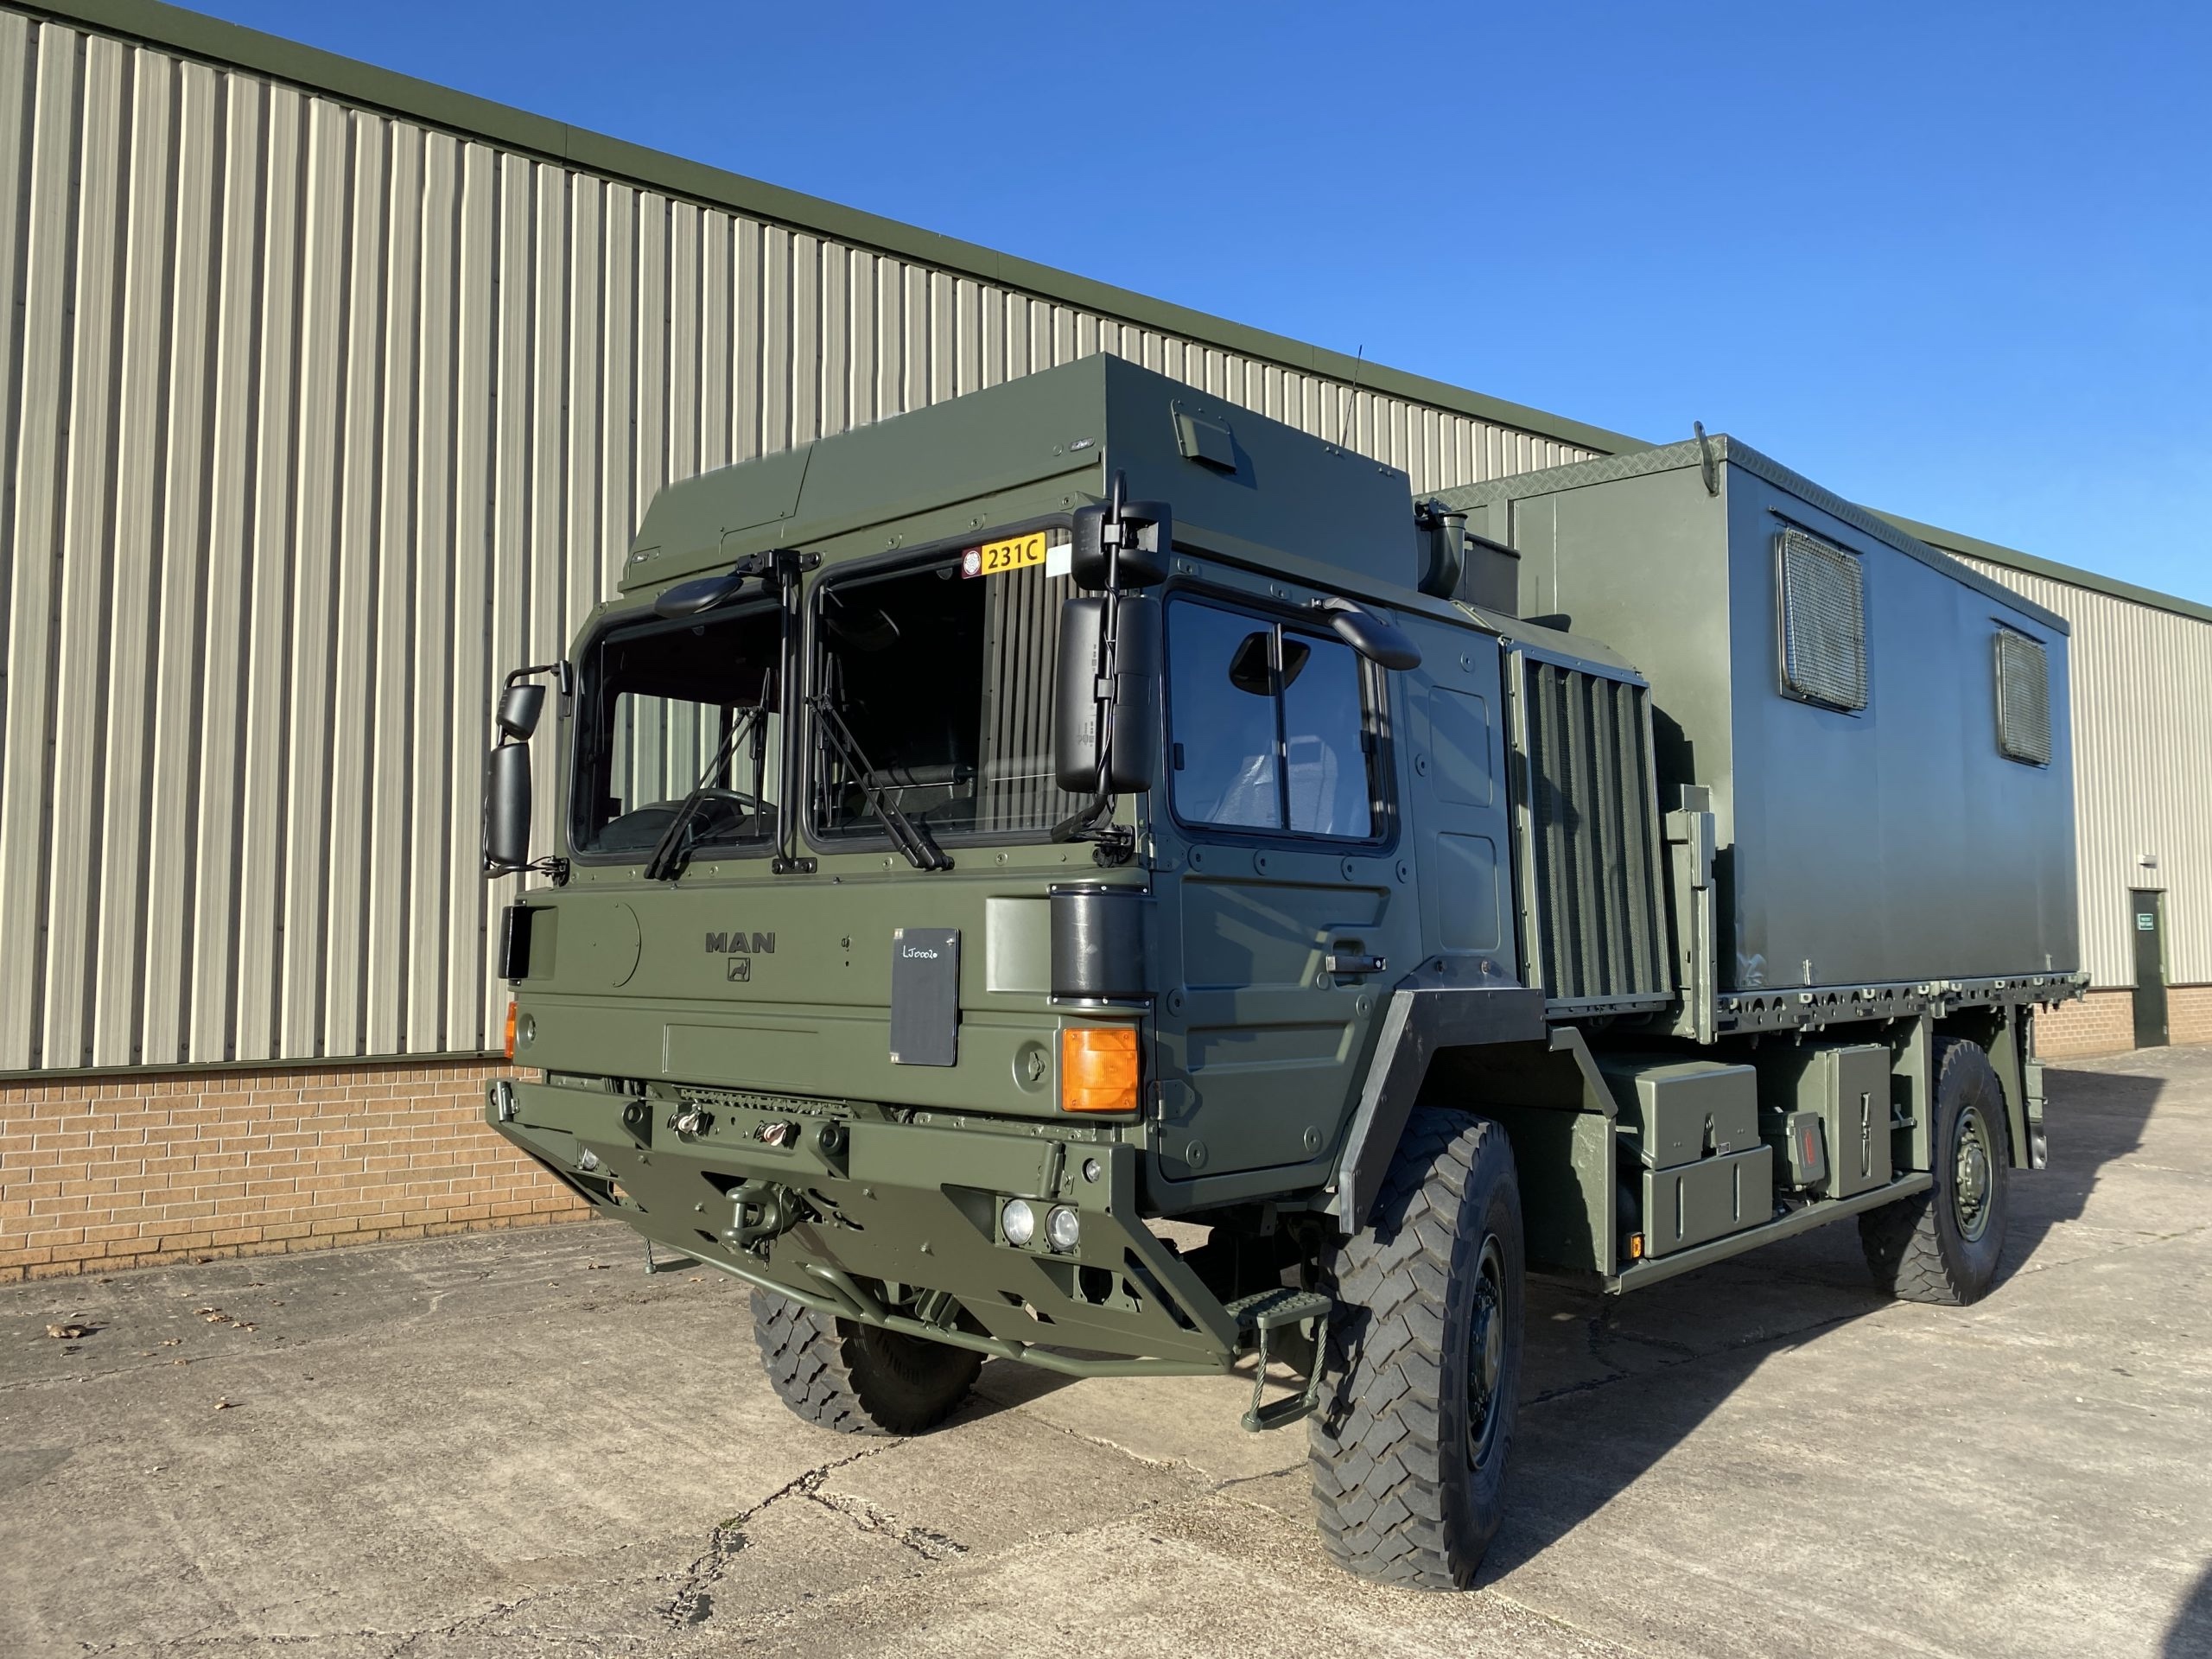 MAN HX60 18.330 Box Truck - Govsales of ex military vehicles for sale, mod surplus